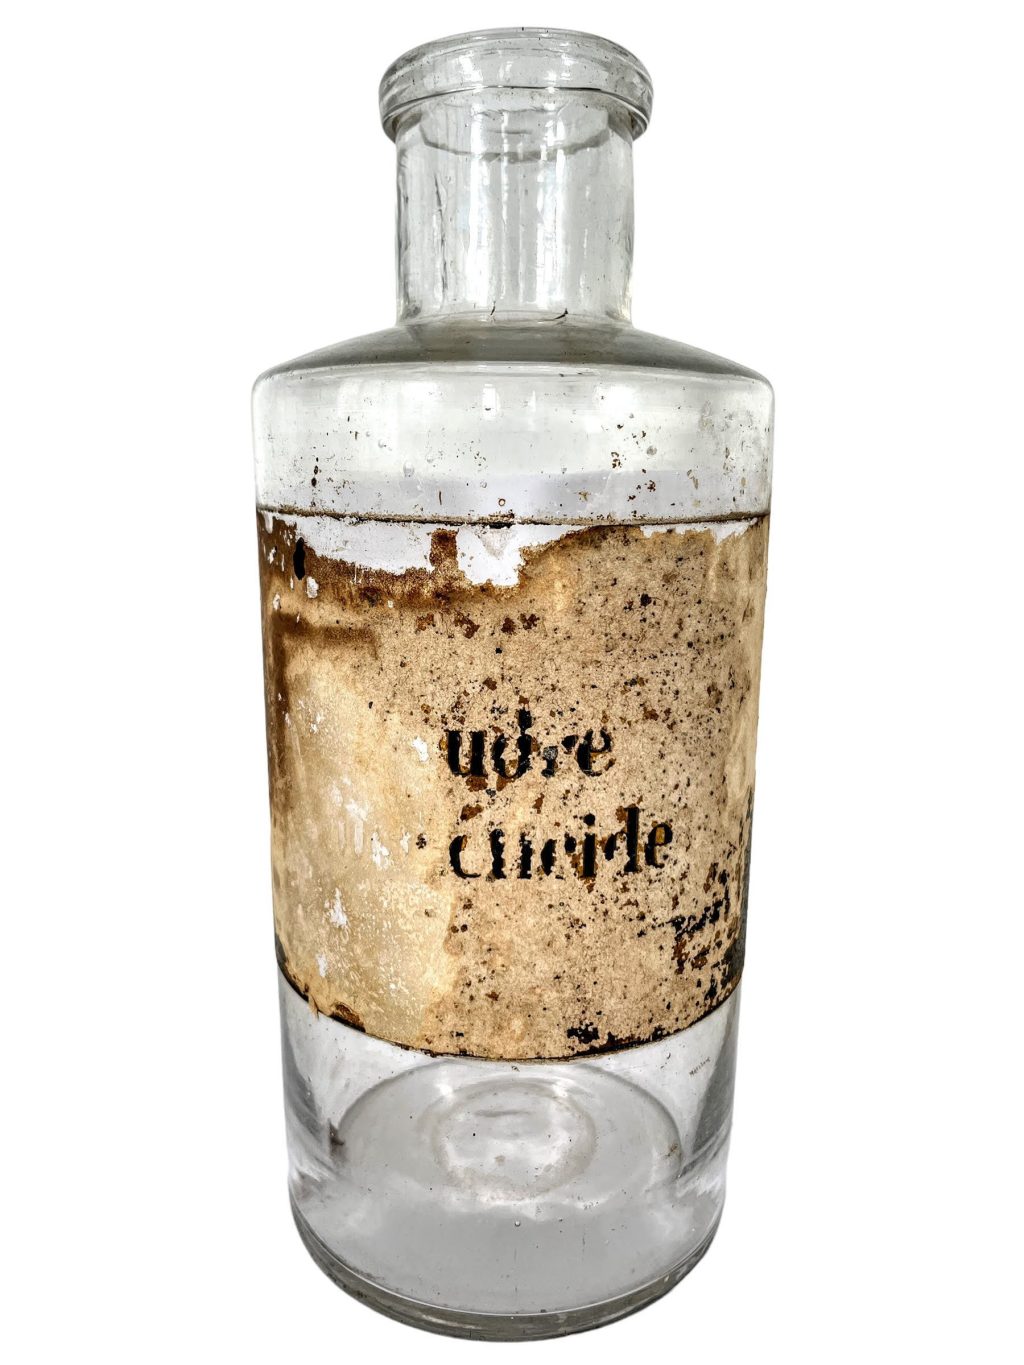 Antique French Apothecary Glass Bottle Pharmacy Medical Chemist Laboratory Bottle Decanter Storage c1910-20’s